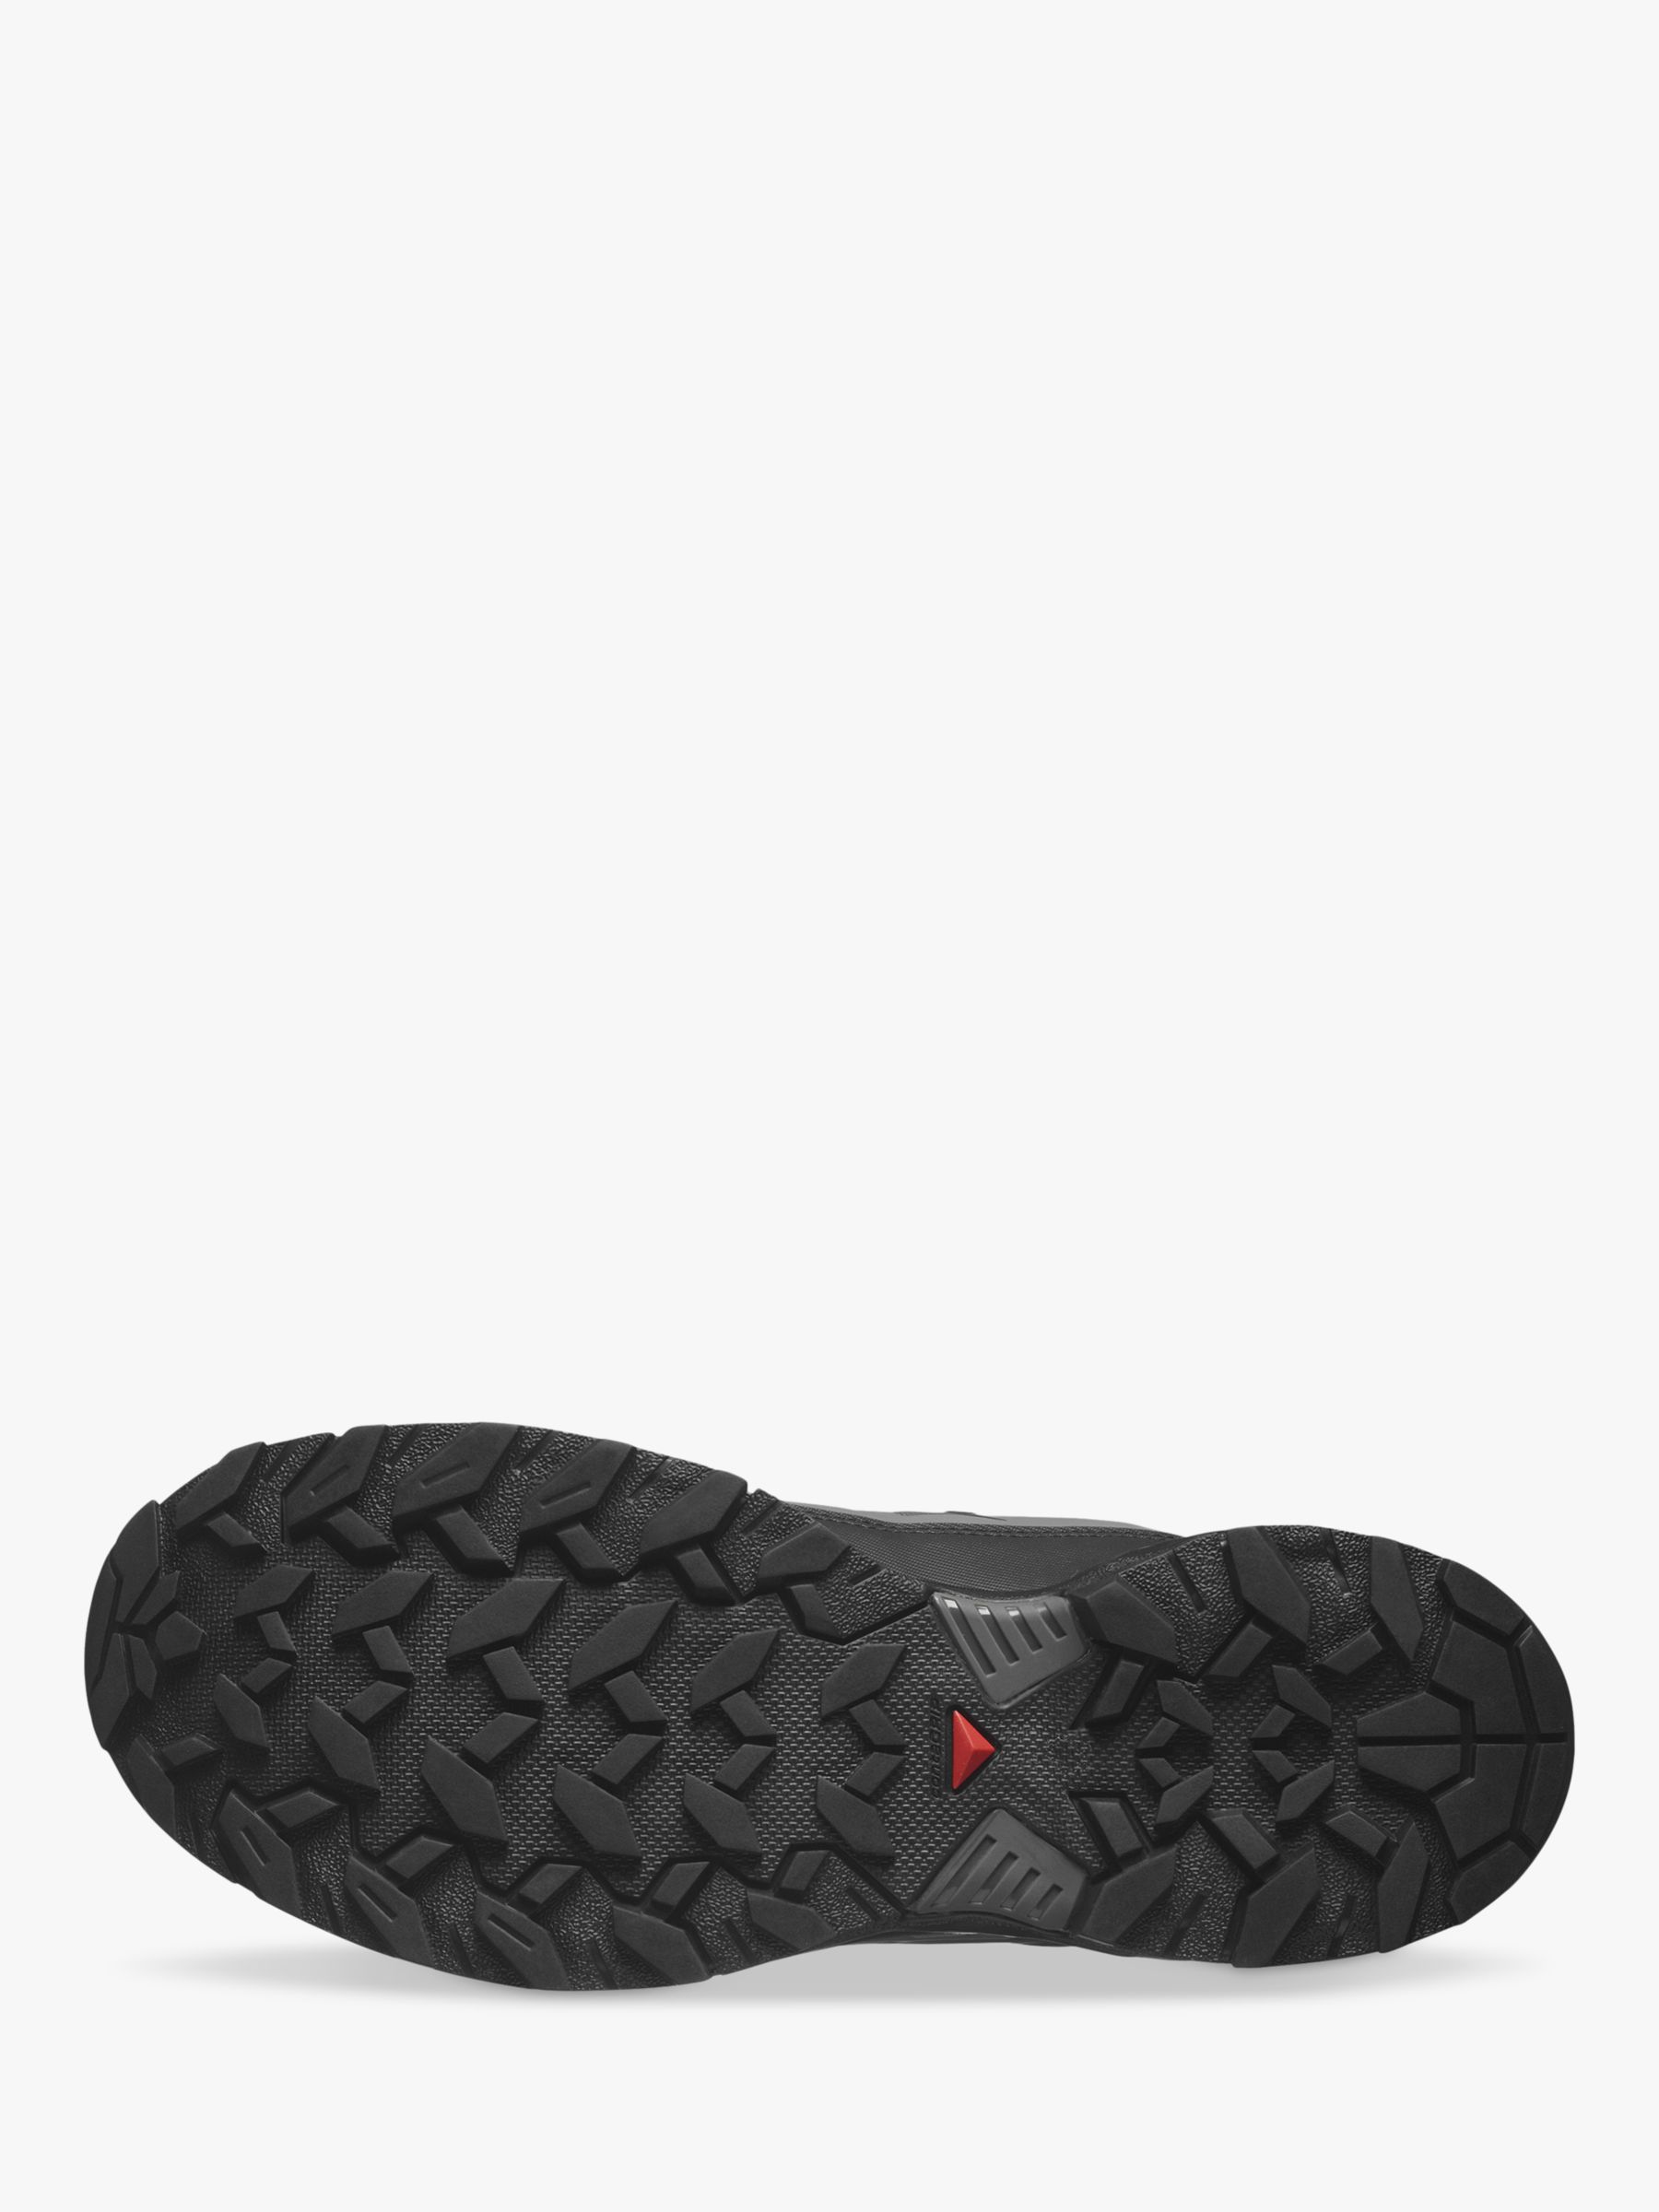 Salomon X Ultra 360 Men's Hiking Shoes, Magnet/Black, 7